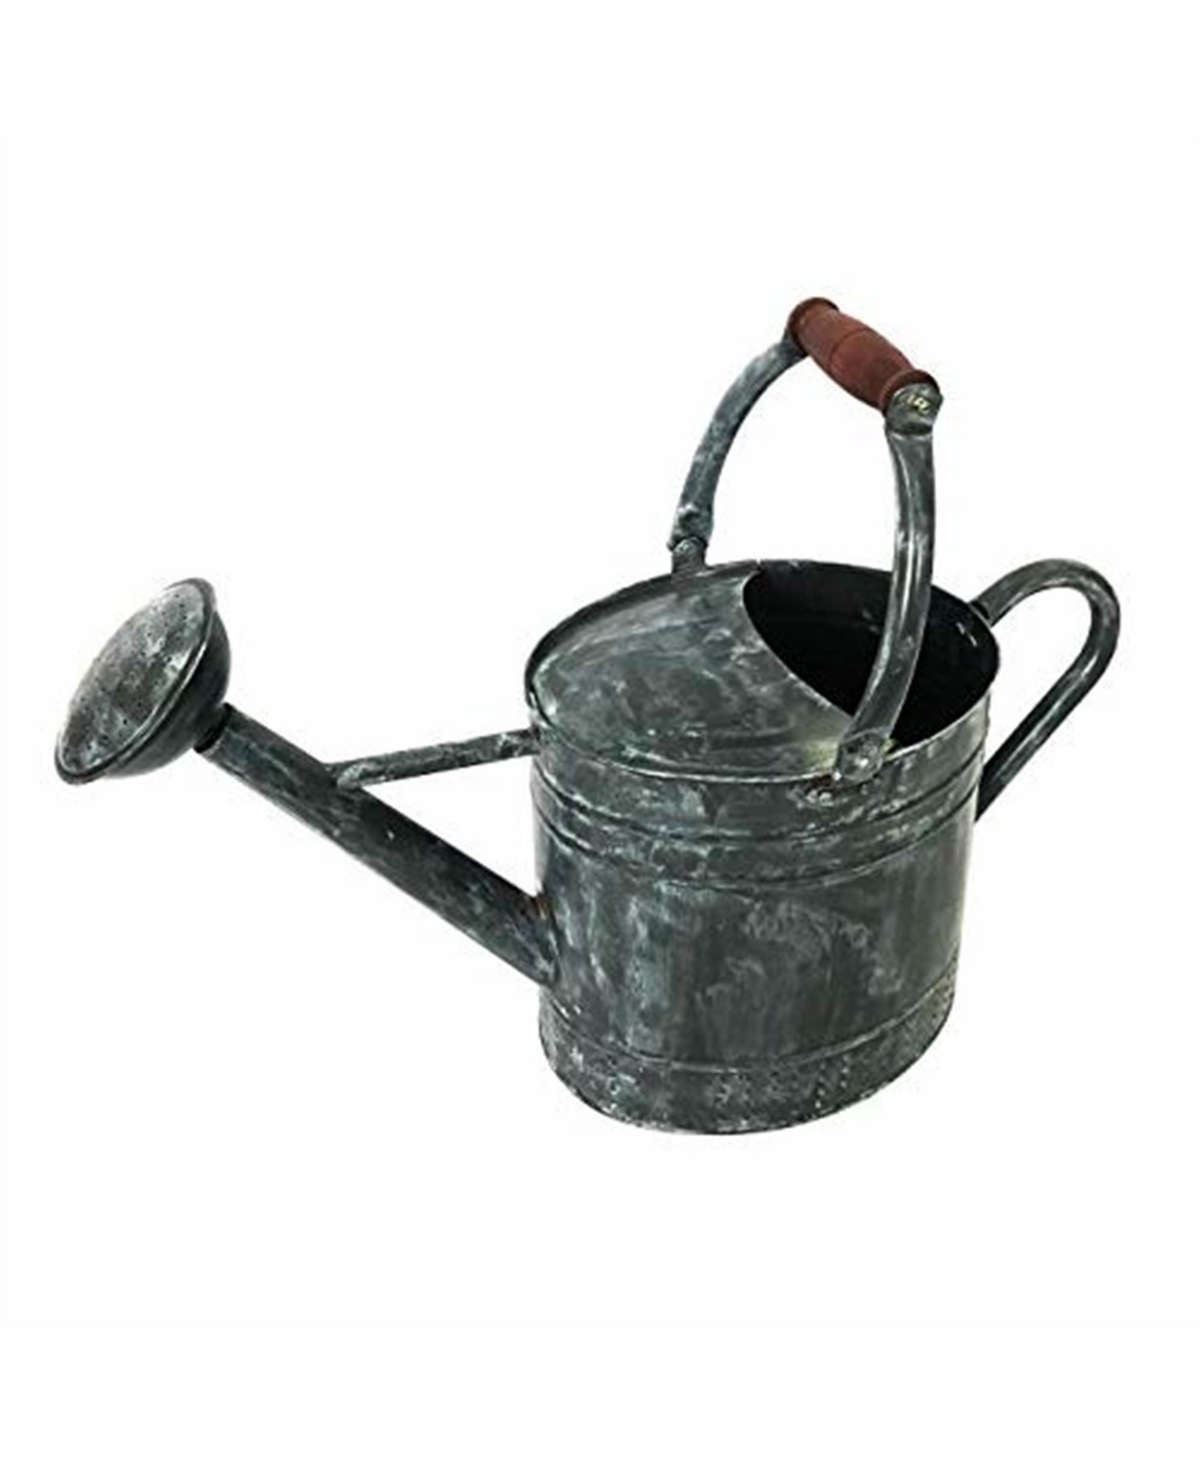 Gardener Select Metal Oval Watering Can, Black, 1.85 Gallons - Black